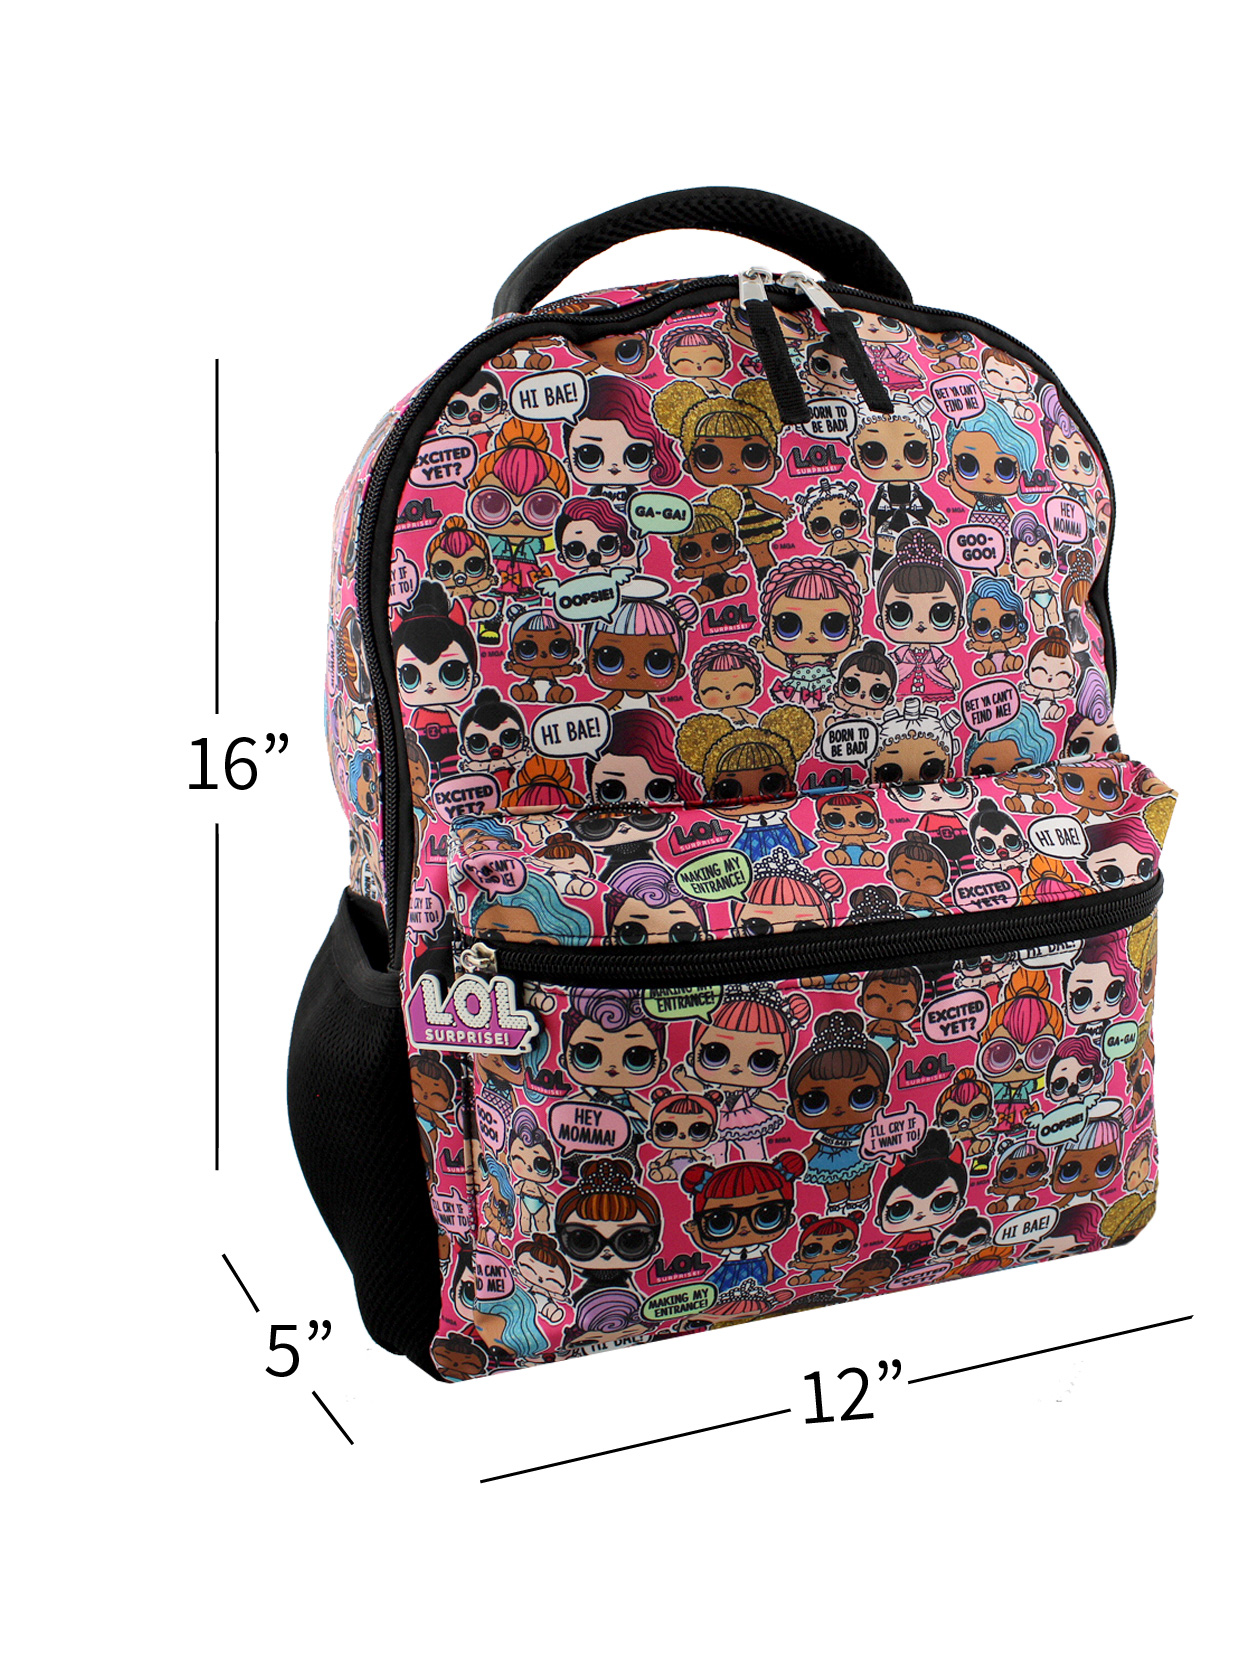 L.O.L. Surprise! Dolls Girls 16" School Backpack B19LO42752 - image 2 of 7